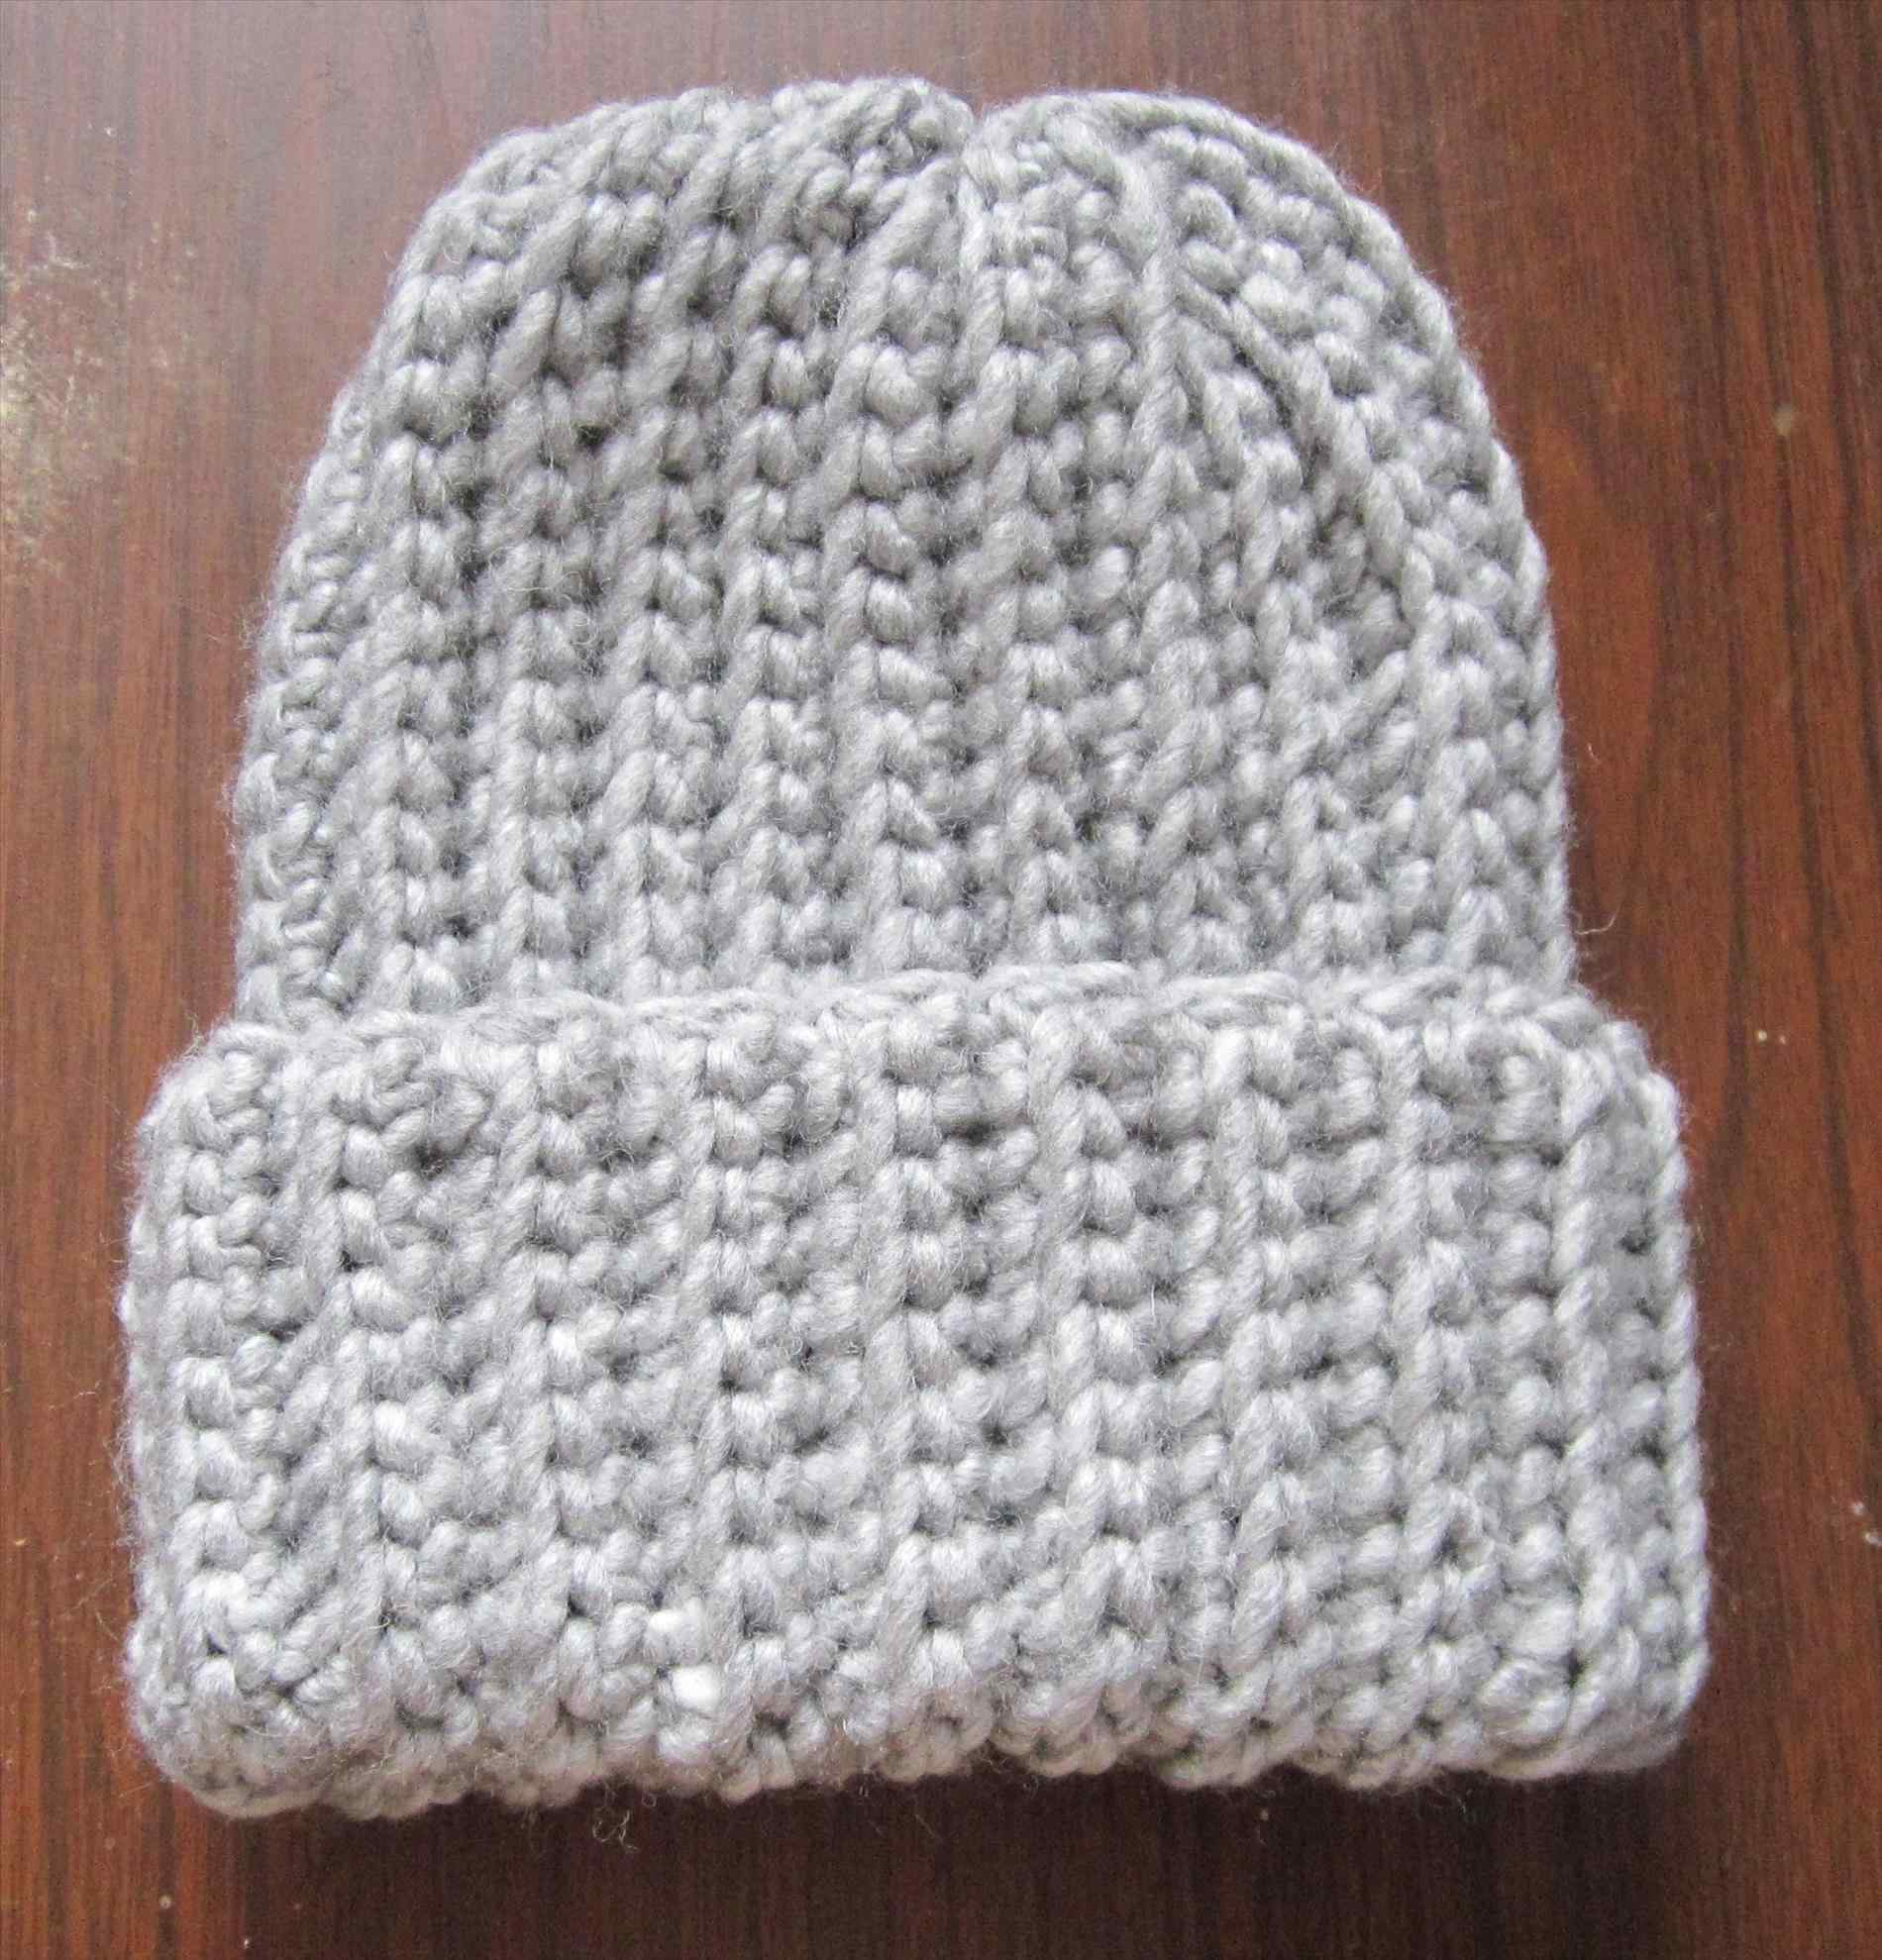 Single Crochet Hat Pattern How To Simple Bralette Crop Top Patternrhfromathreadblogspotcom Free